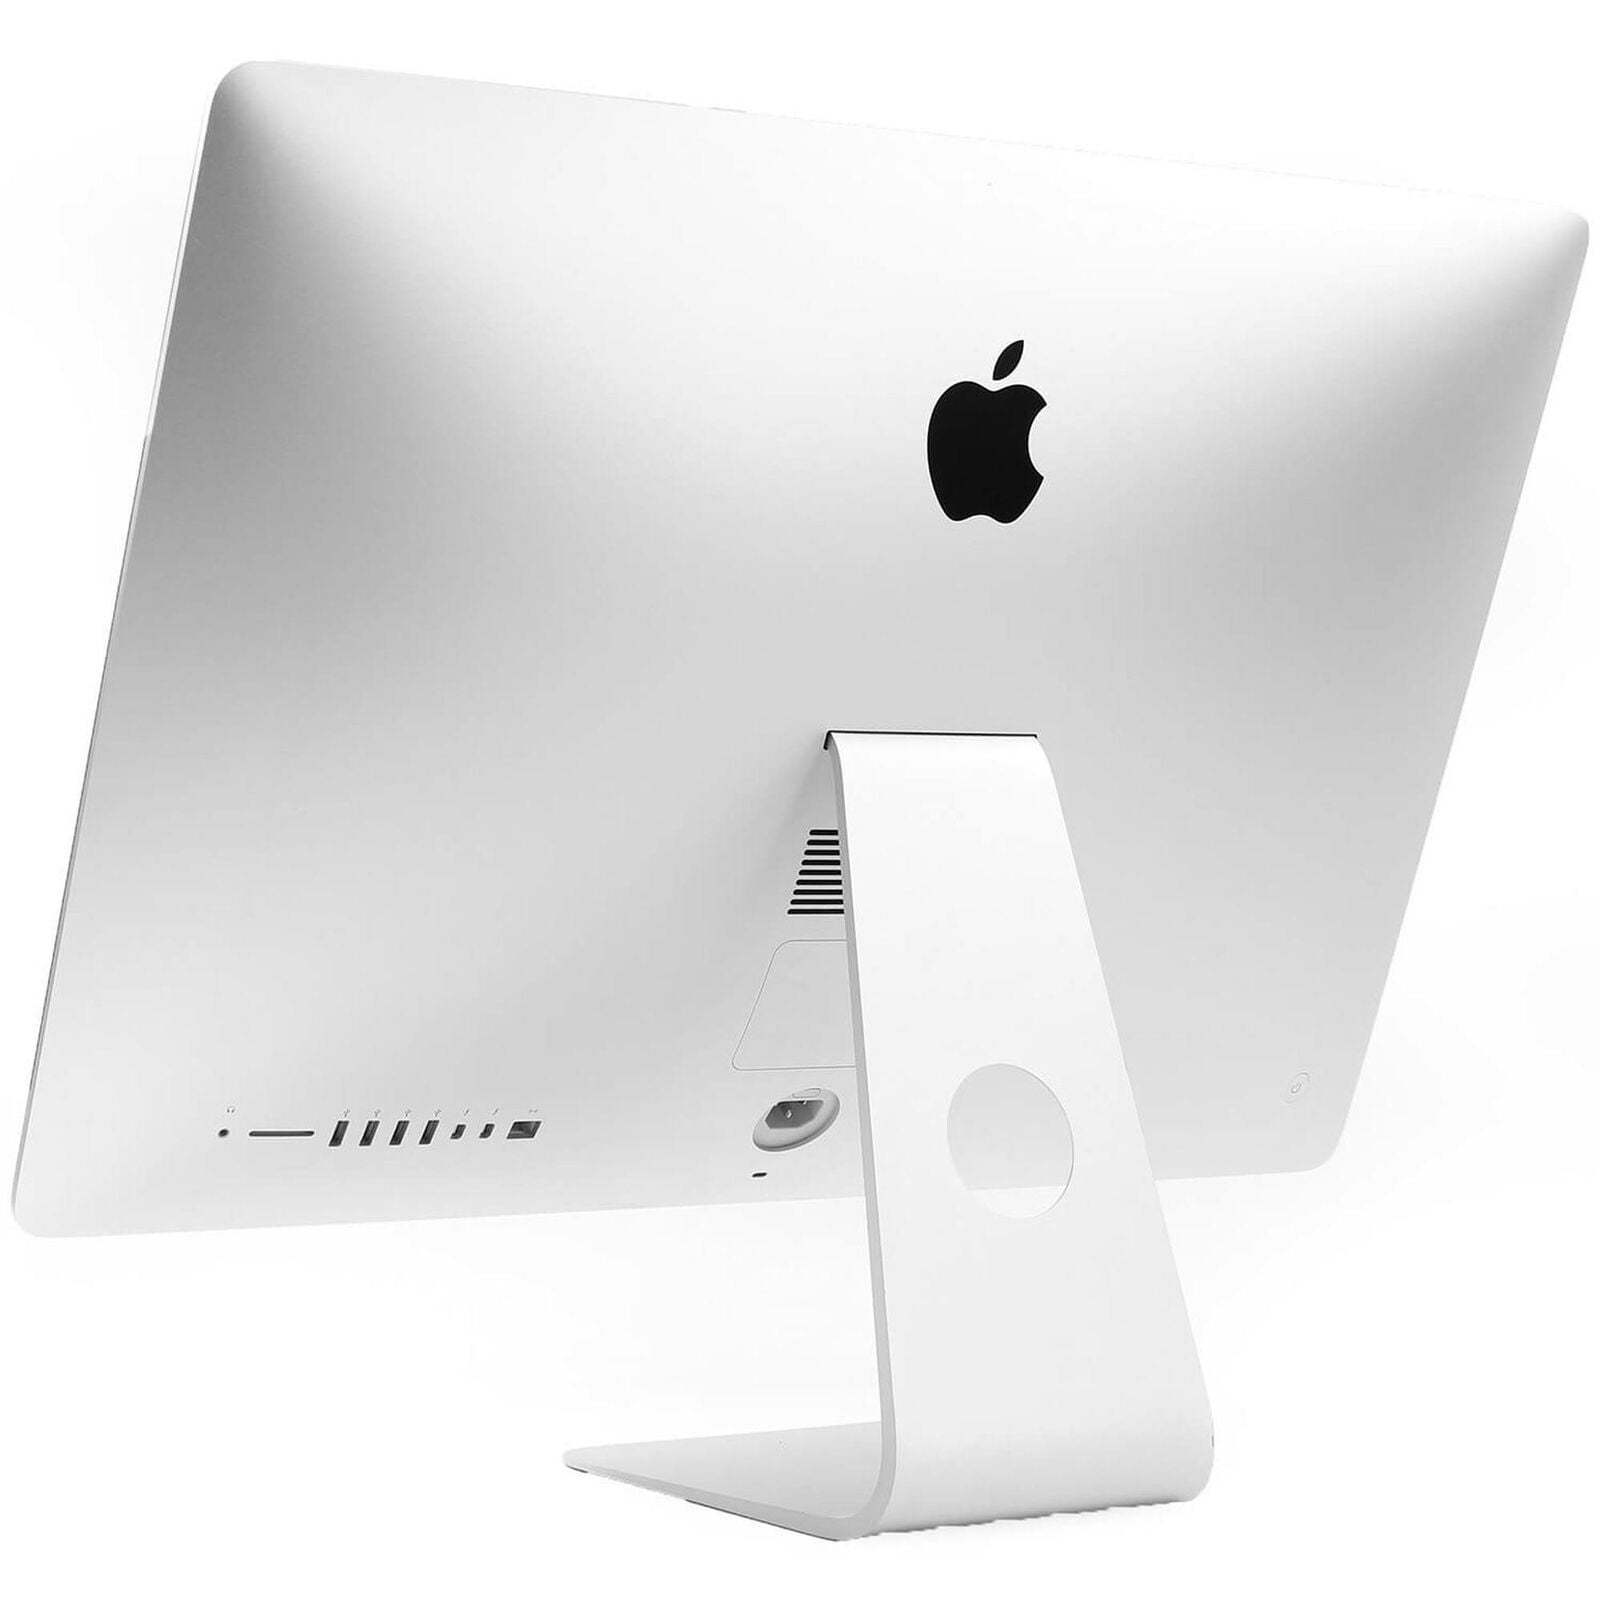 wildernis Aanvankelijk plotseling Apple iMac A1419 27" All-In-One Computer, Intel Core i5, 8GB RAM, 1TB HD,  Mac OS, Silver, MD096LL/A (Refurbished) - Walmart.com